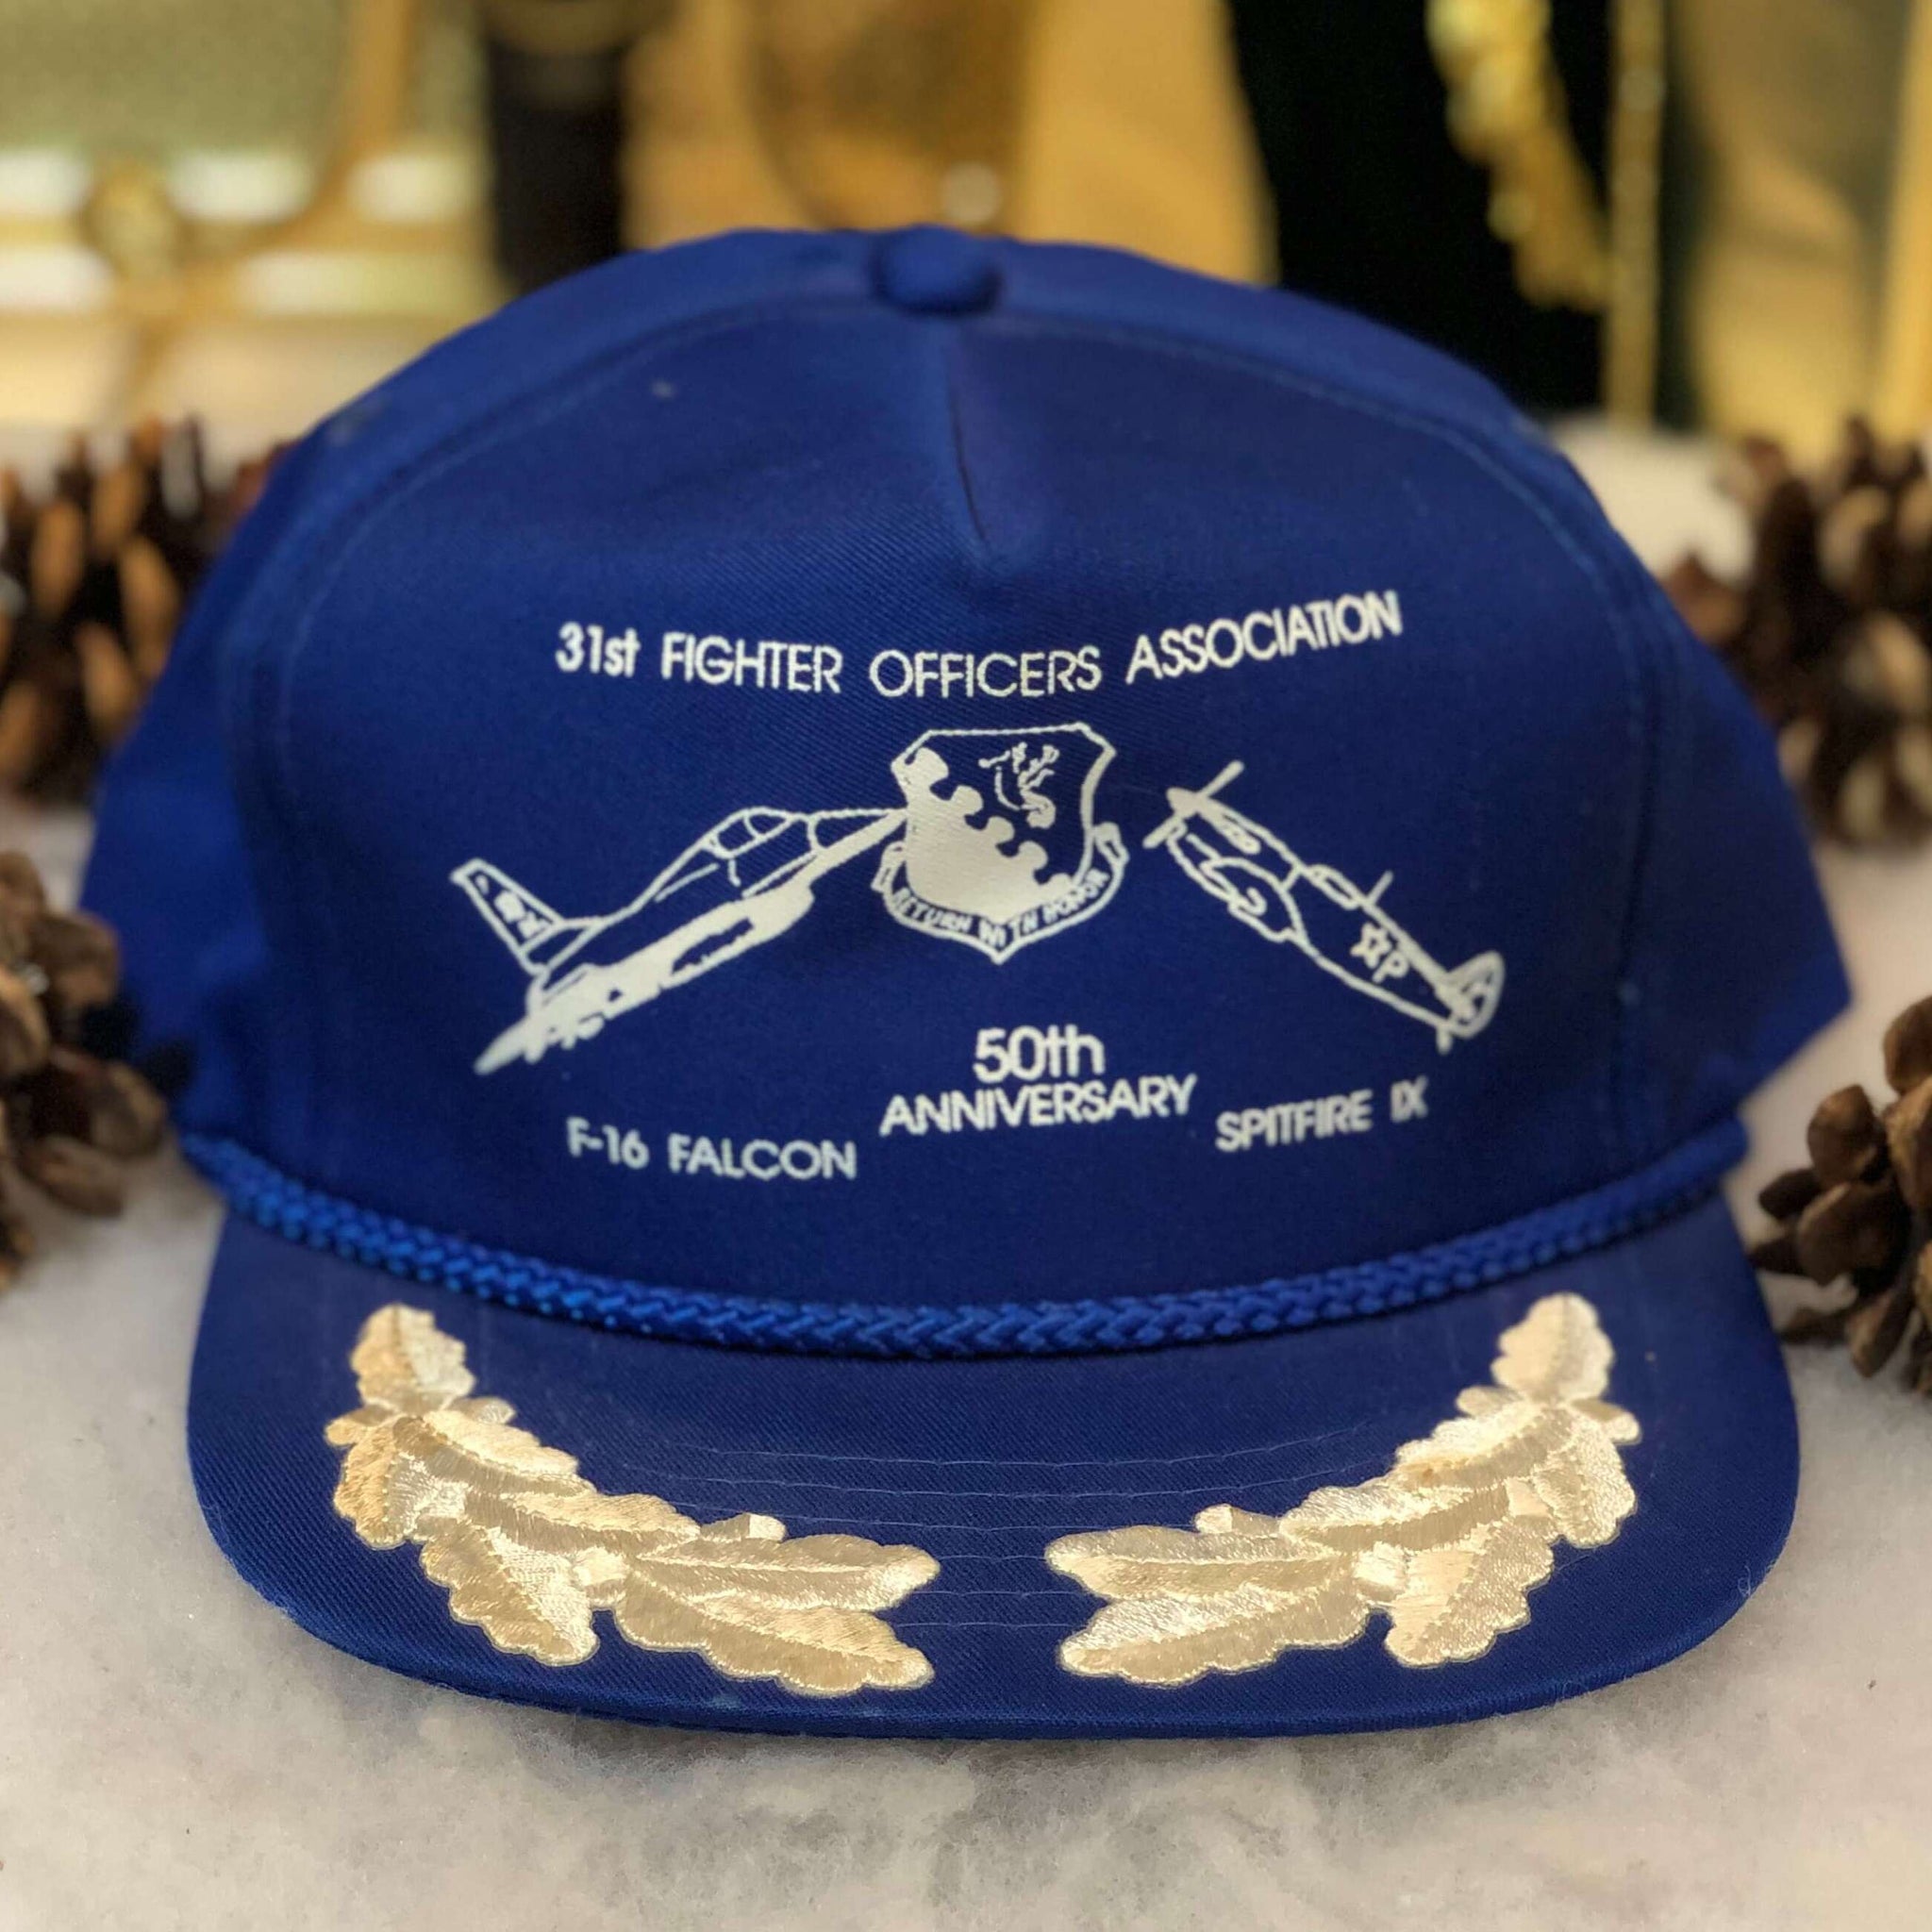 Vintage 31st Fighter Officers Association 50th Anniversary Spitfire Texas Snapback Hat